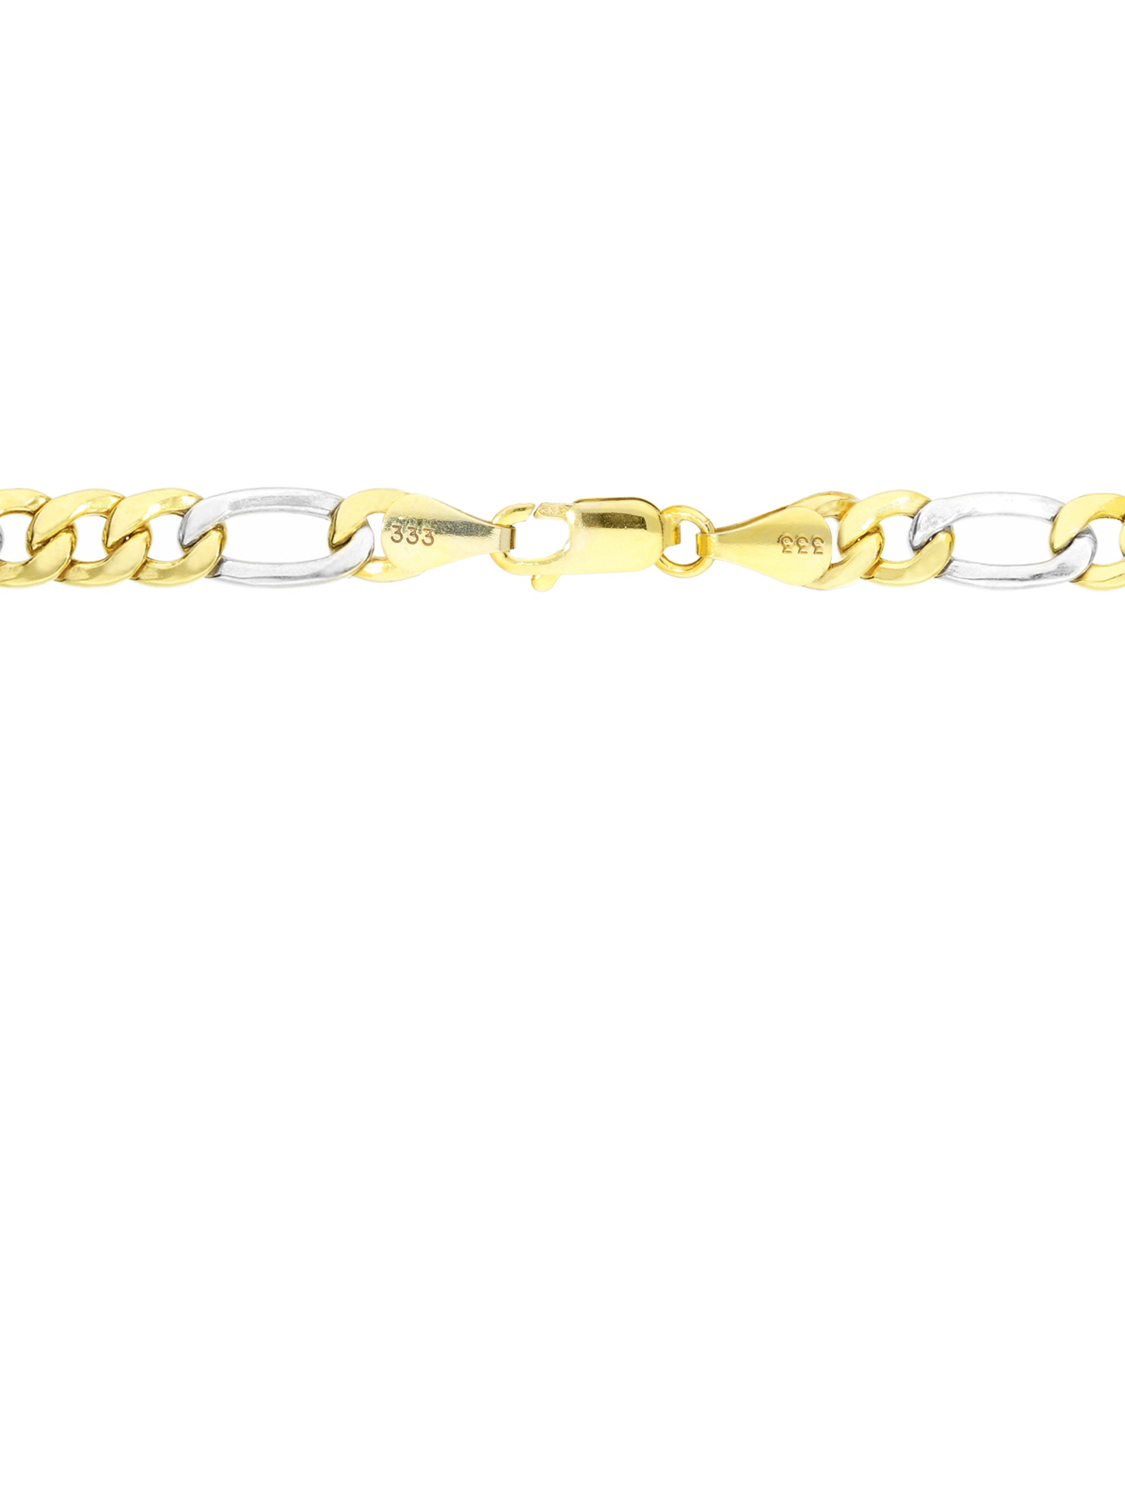 Magali - Figaro Goldarmkette Bicolor Karabiner - Breite 6 mm - Länge 19 cm